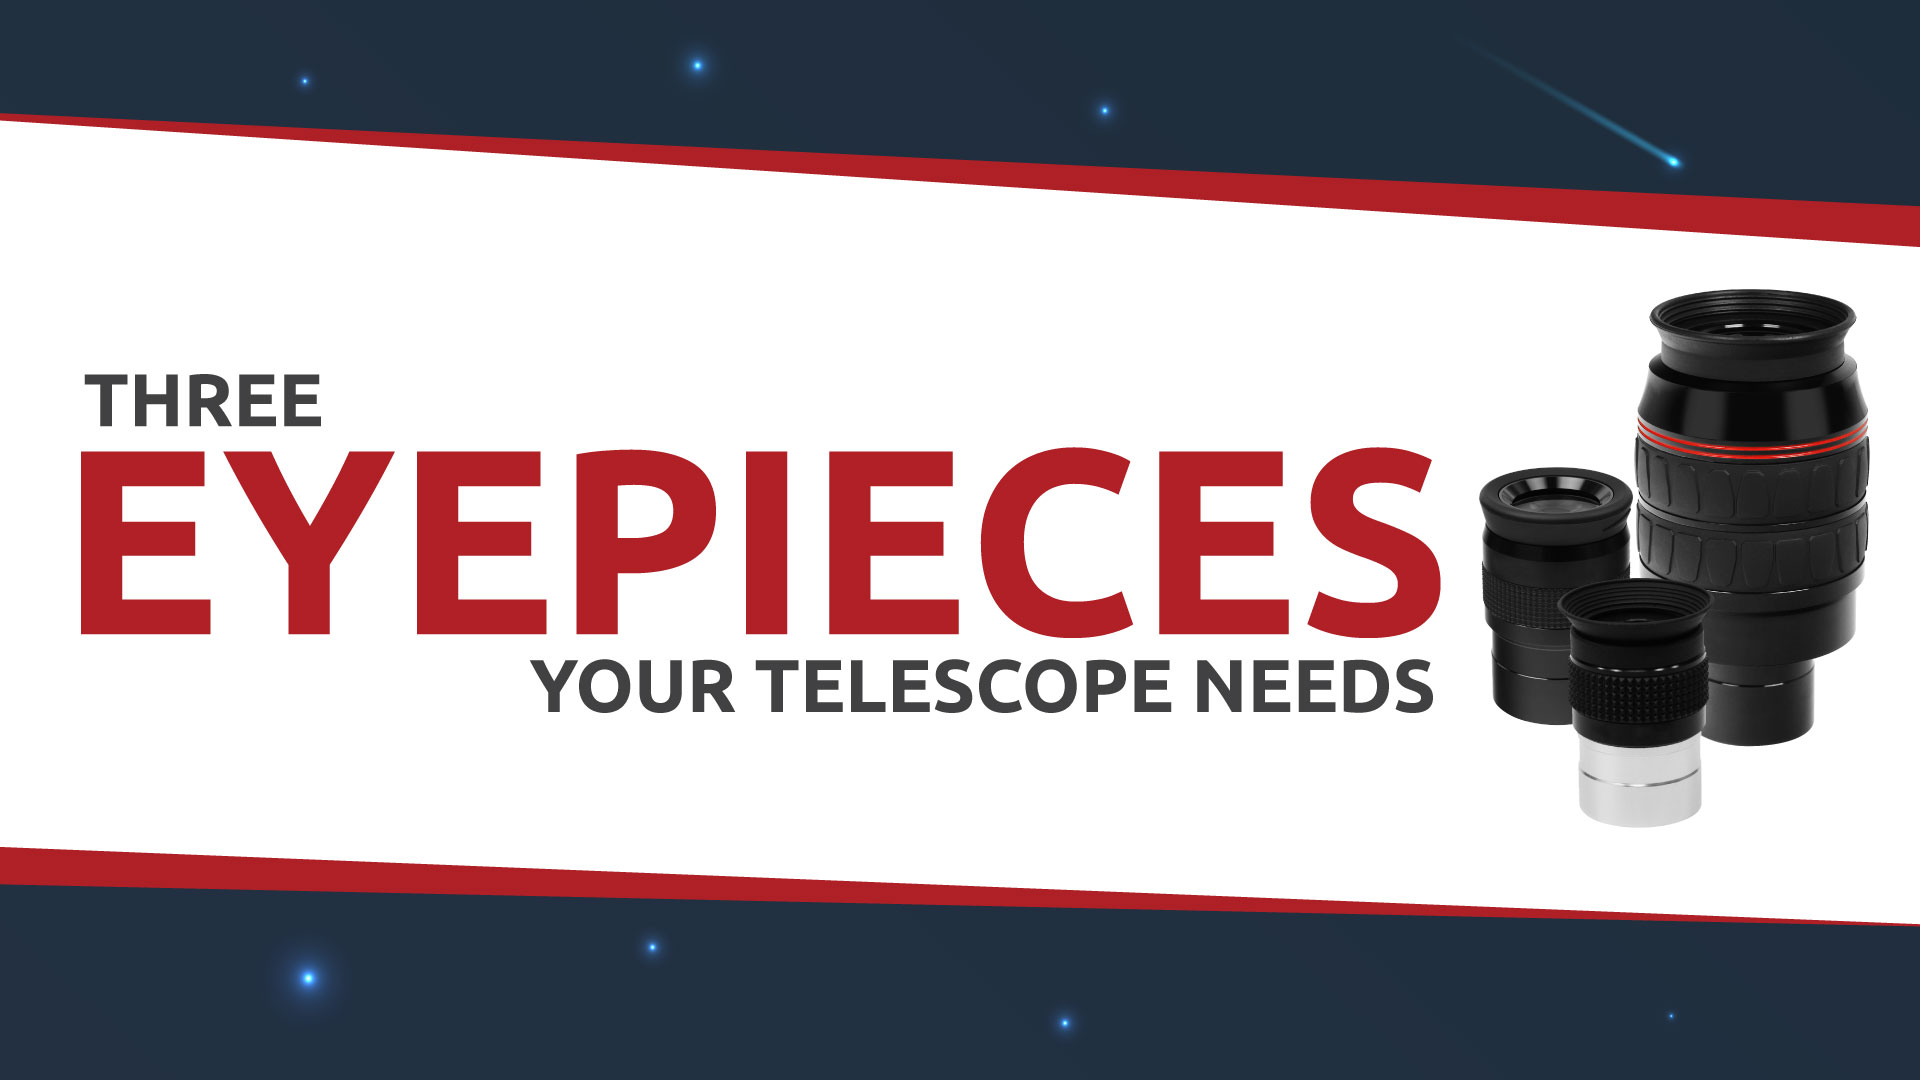 Your telescope needs these three eyepieces!